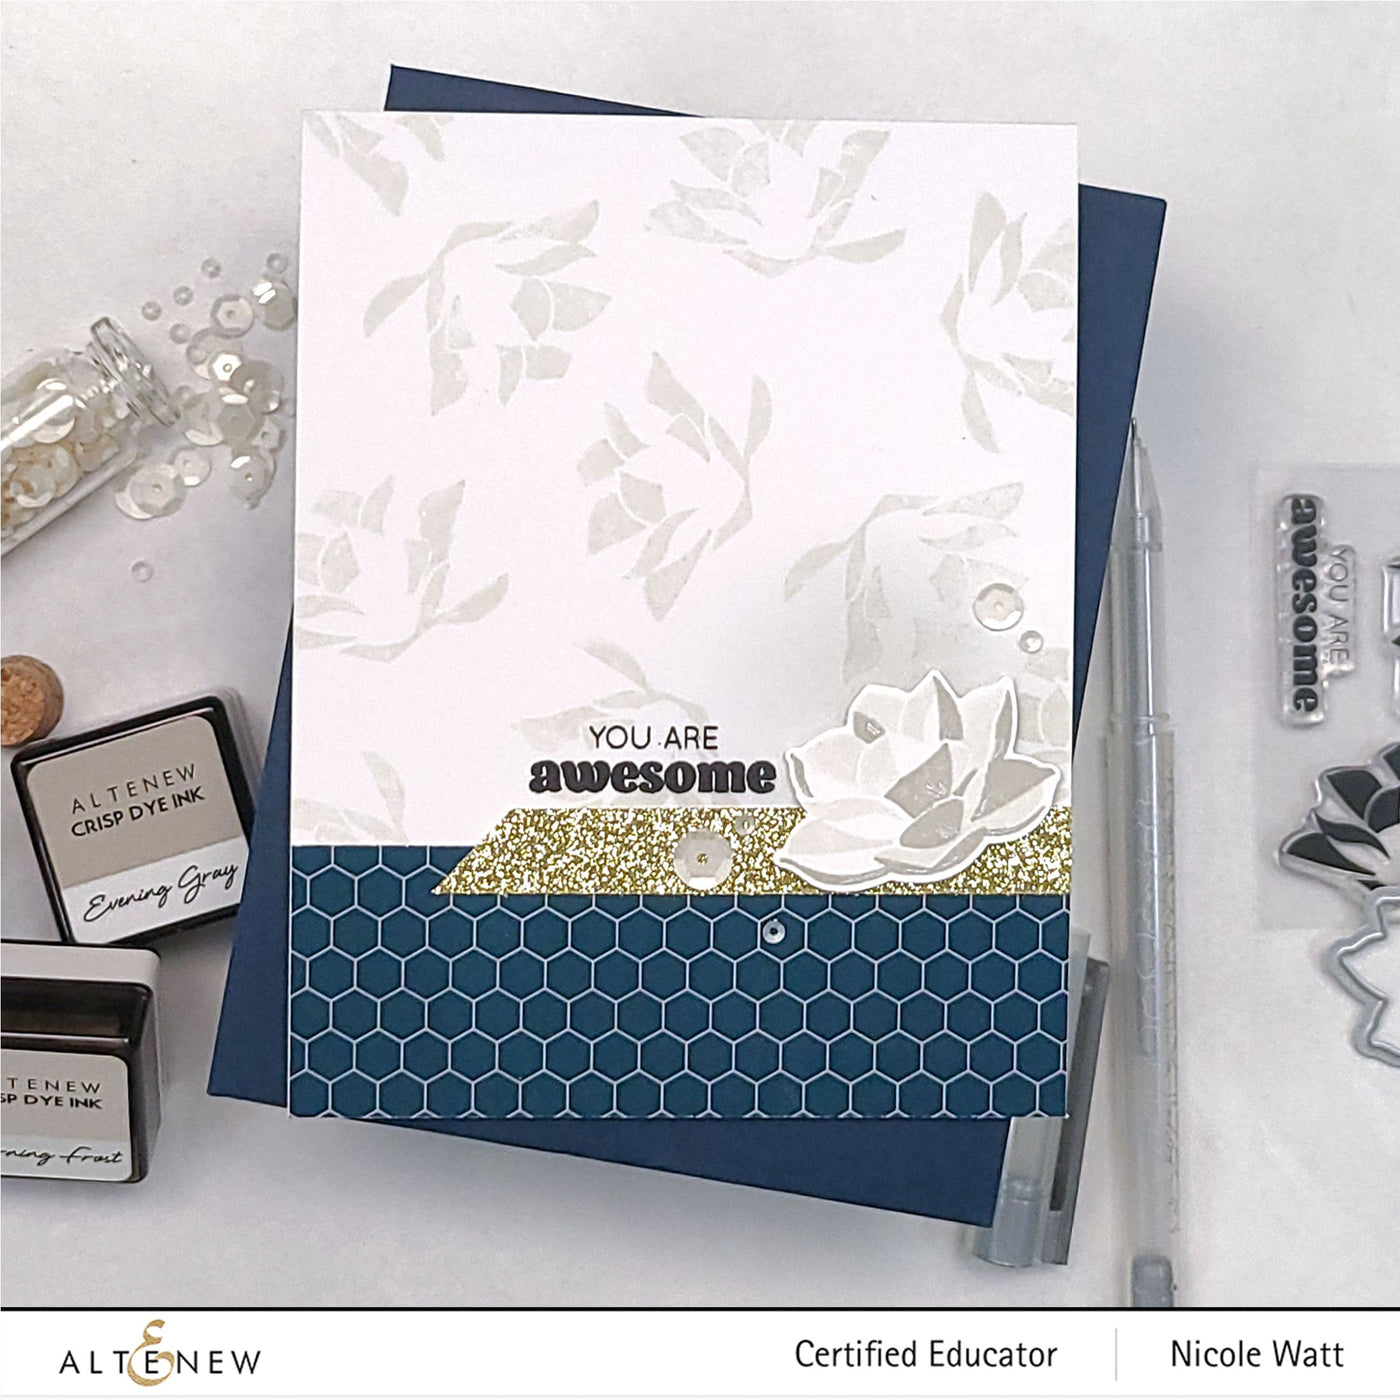 Mini Delight Mini Delight: Crystal Lotus Stamp & Die Set